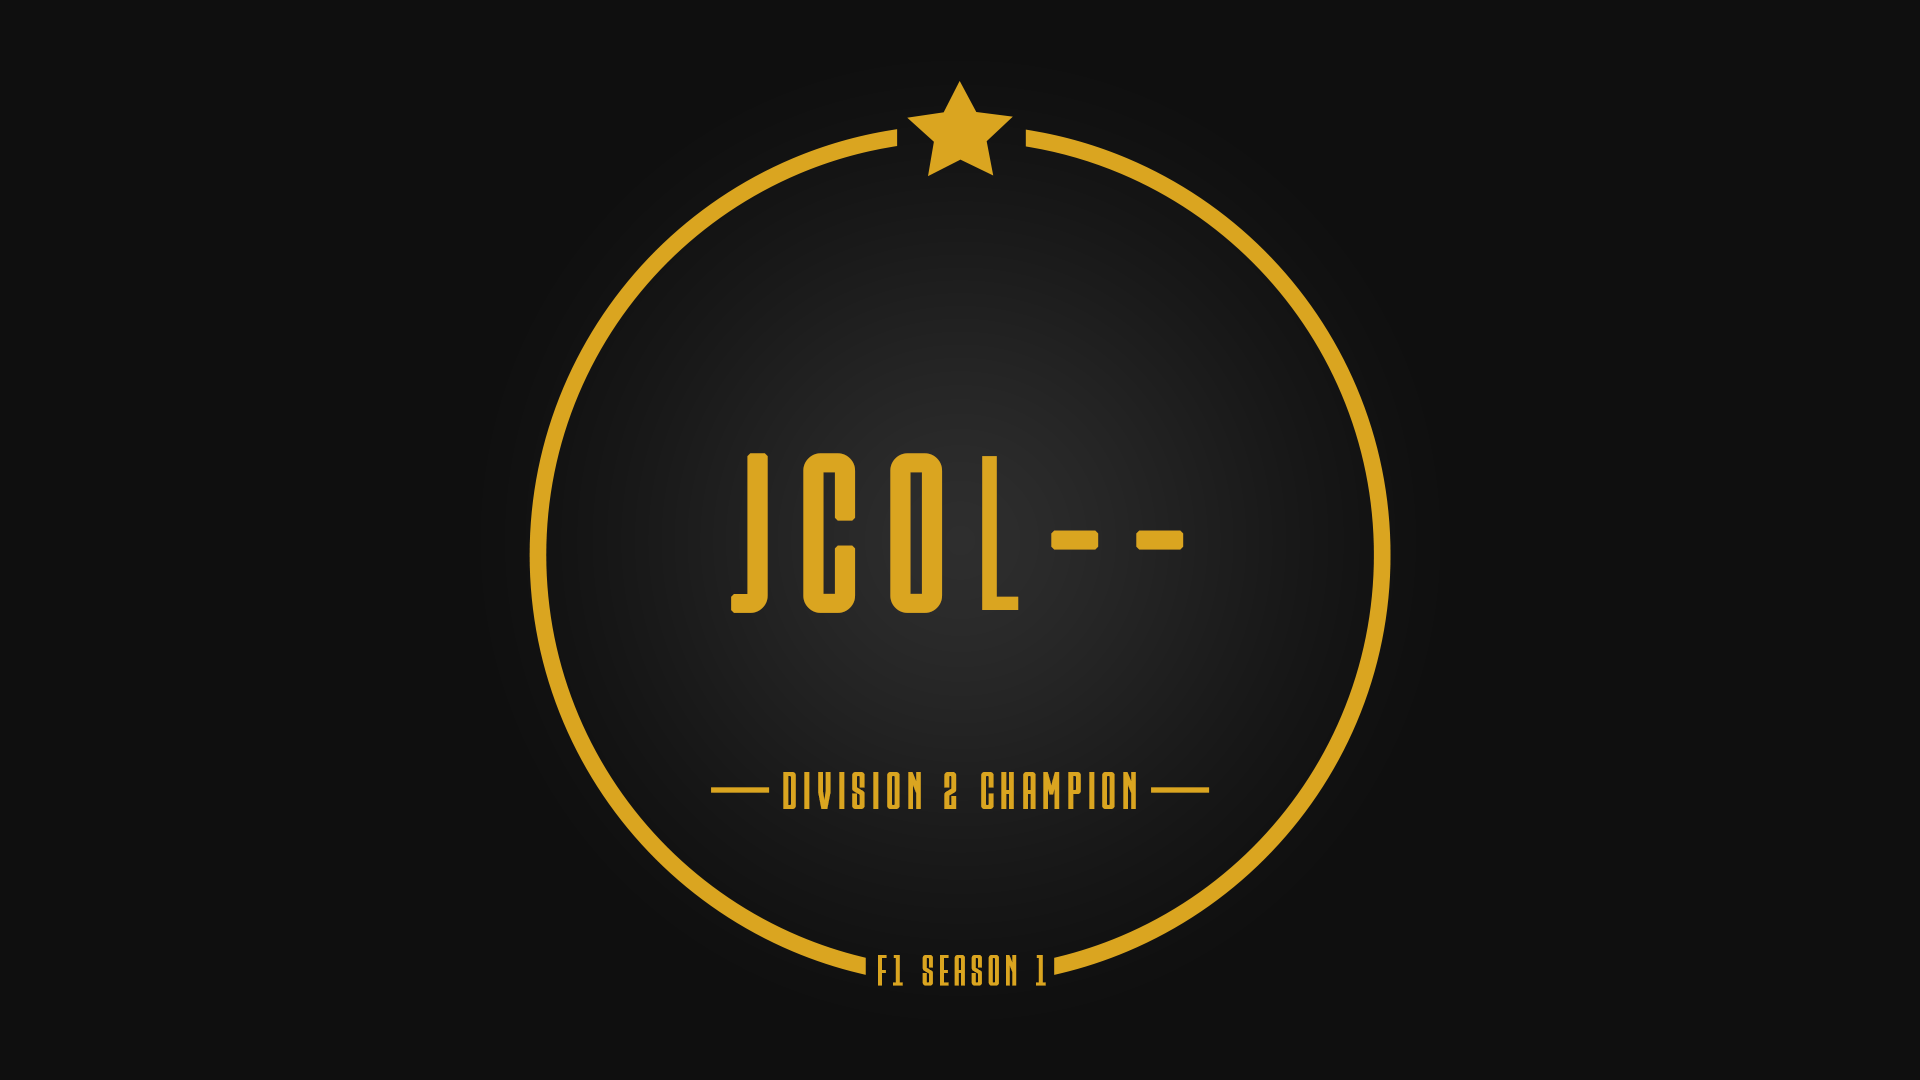 Division 2 Champion - JCoL--